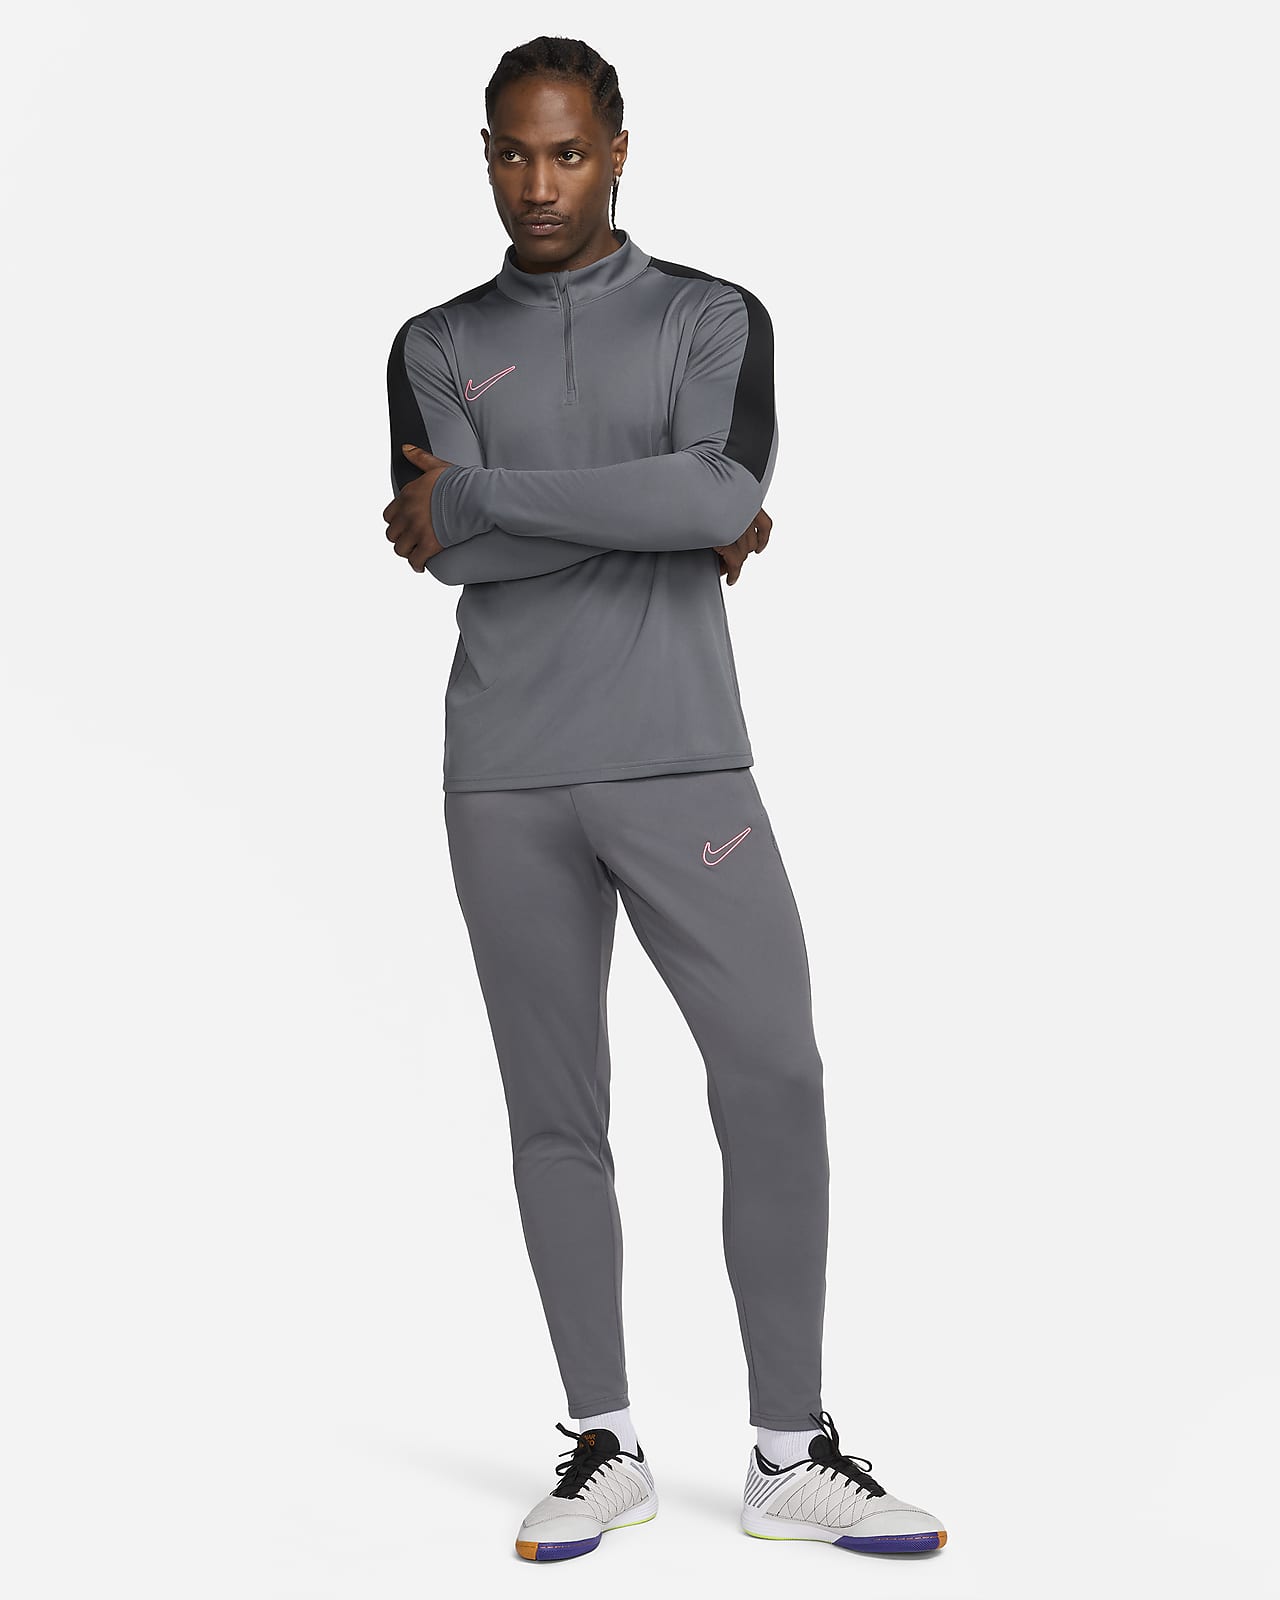 Nike Men AS Dry Academy 21 Track Suit Set Black Jacket Pant Jersey